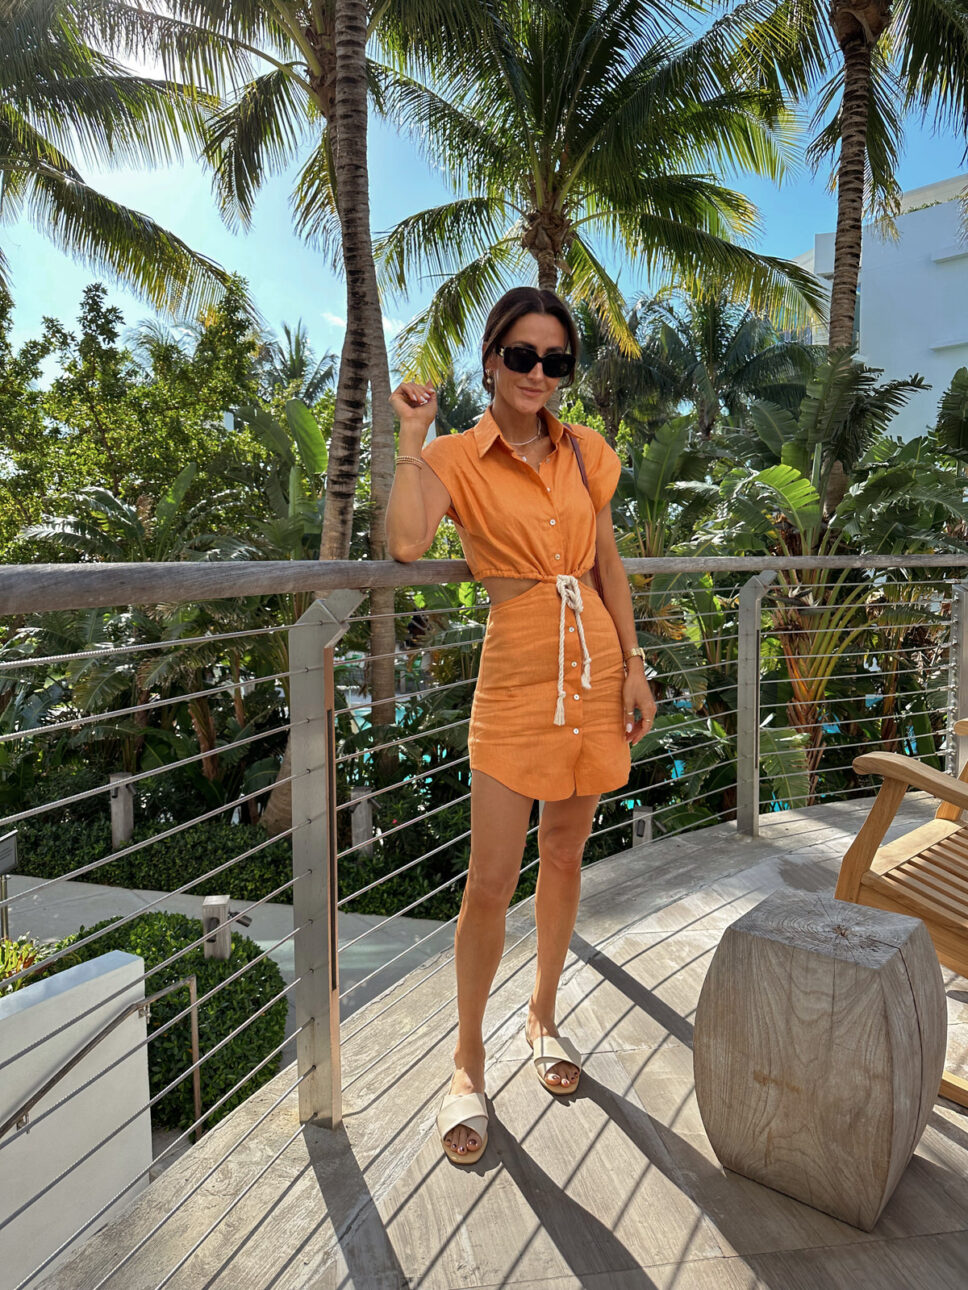 Karina wears Hevron orange linen dress with Nisolo Sandals and Celine sunnies